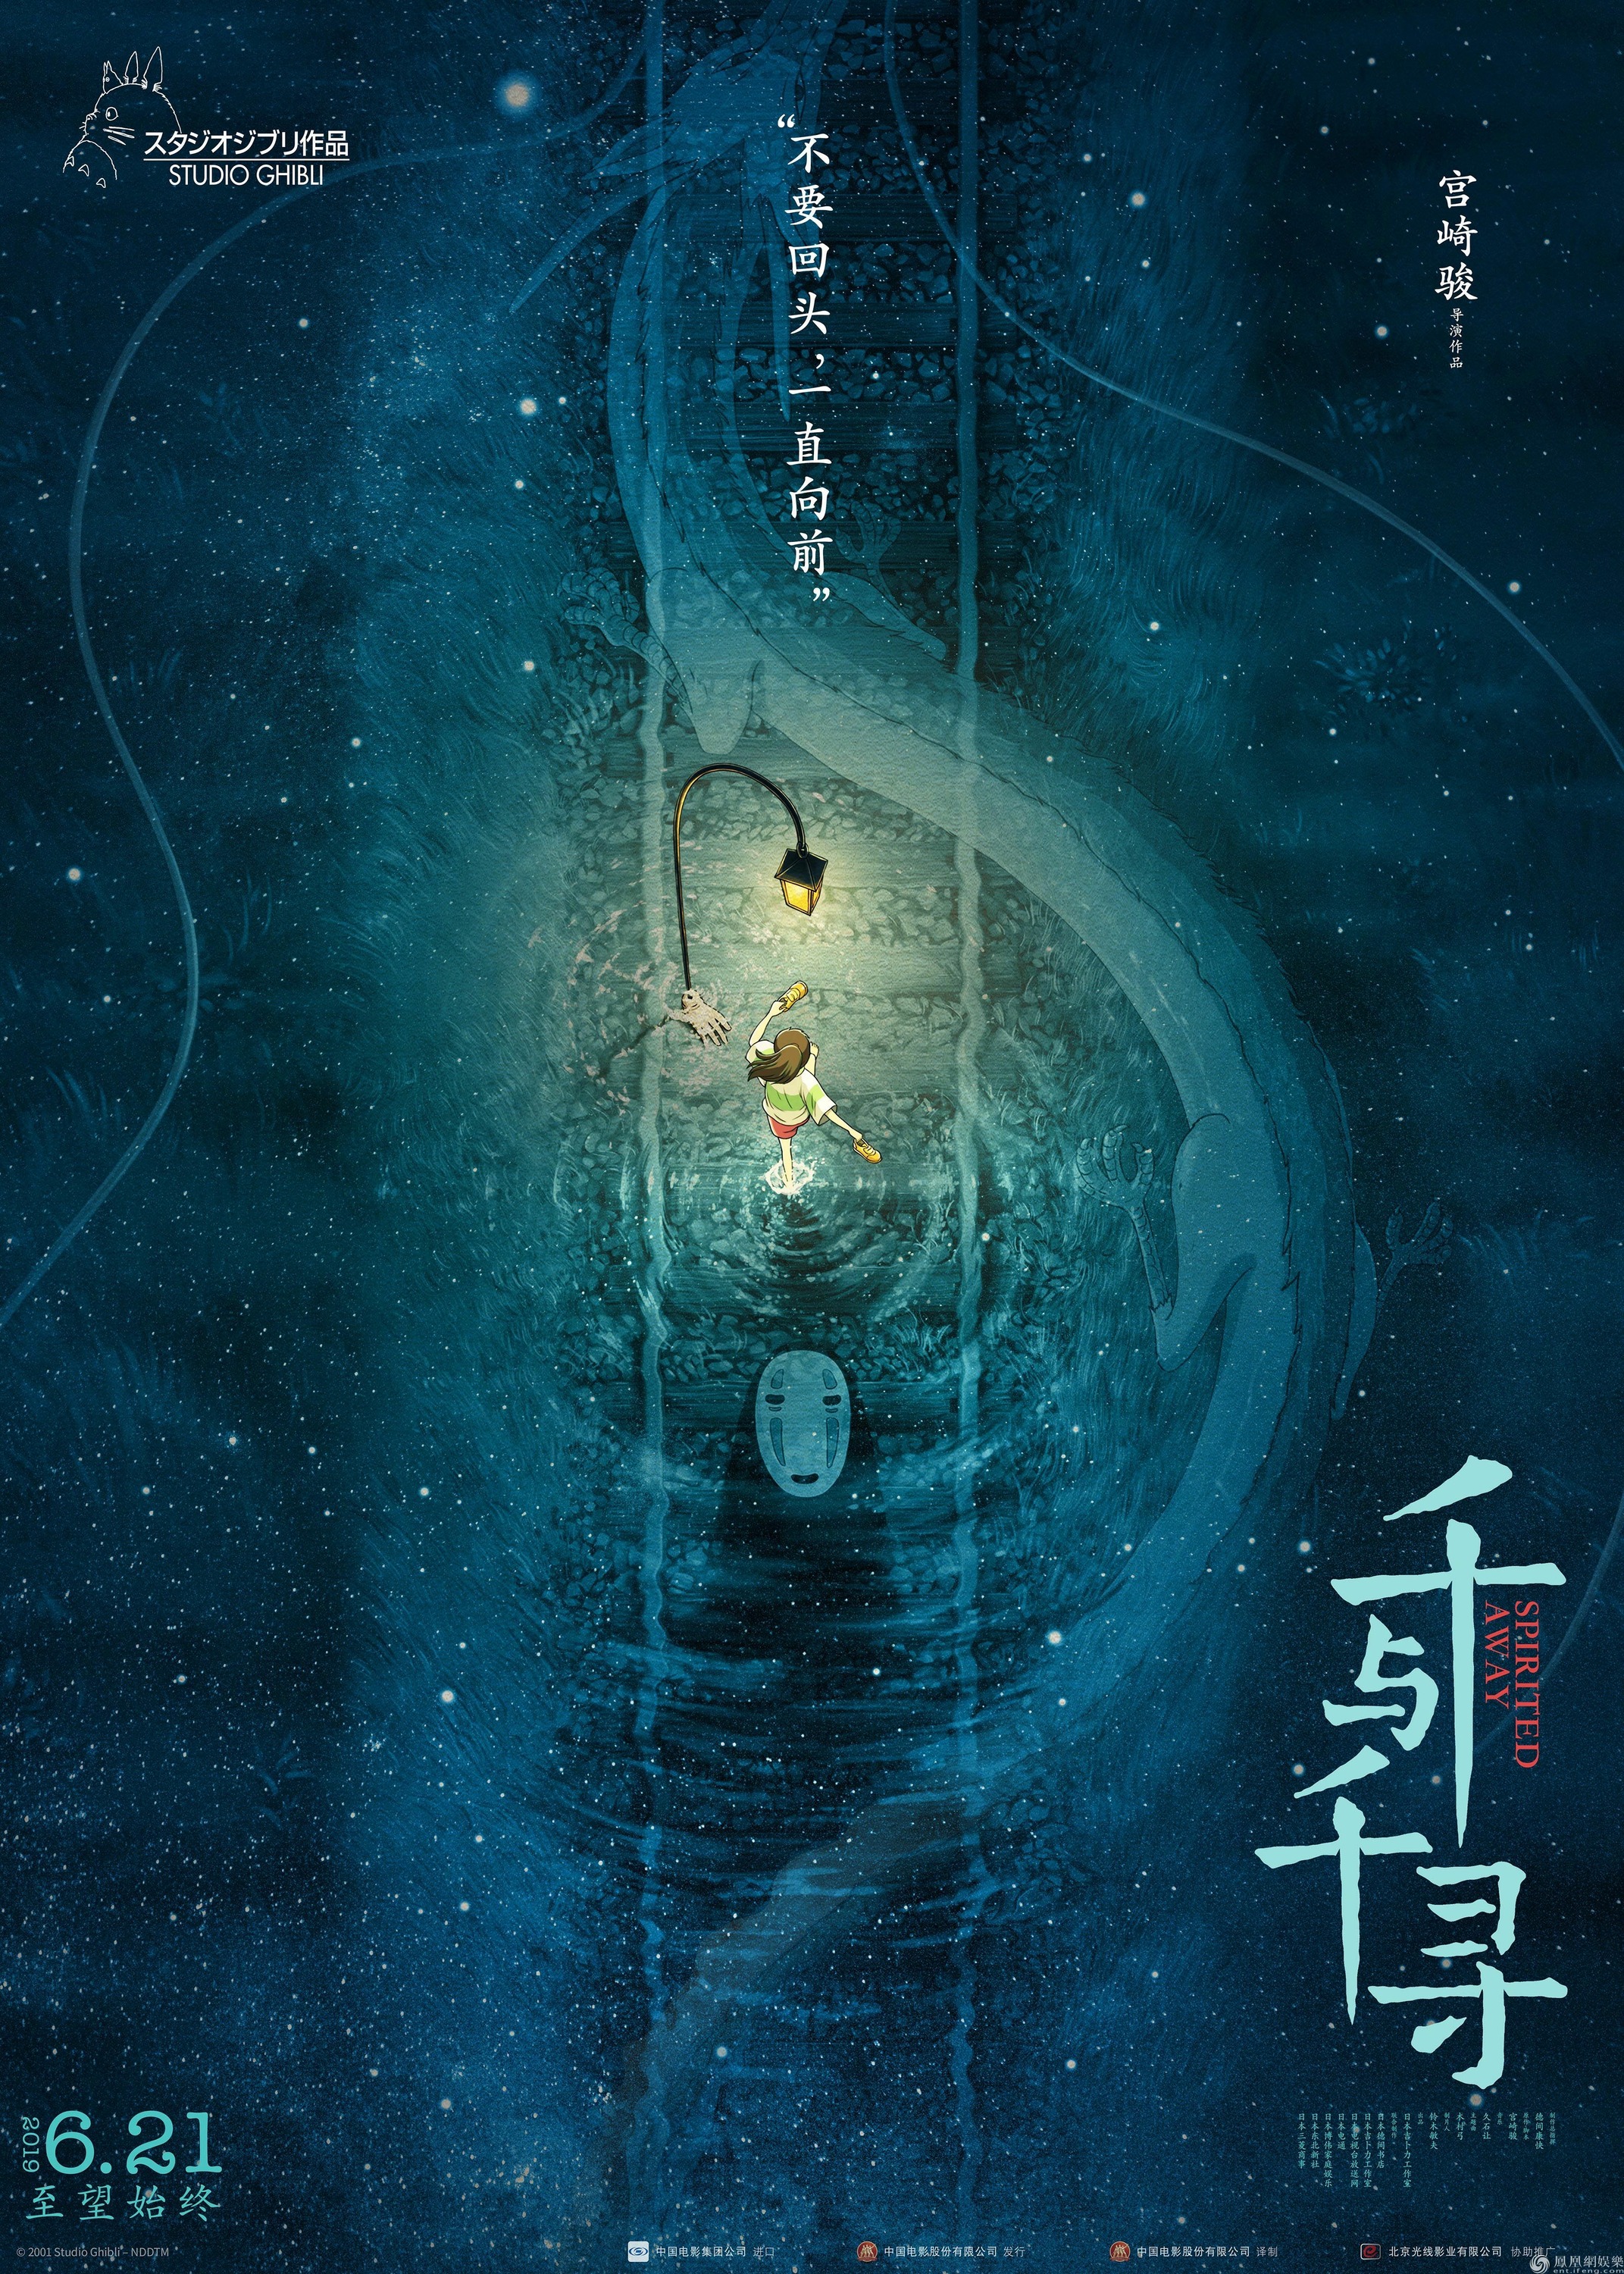 Mega Sized Movie Poster Image for Spirited Away (#7 of 7)